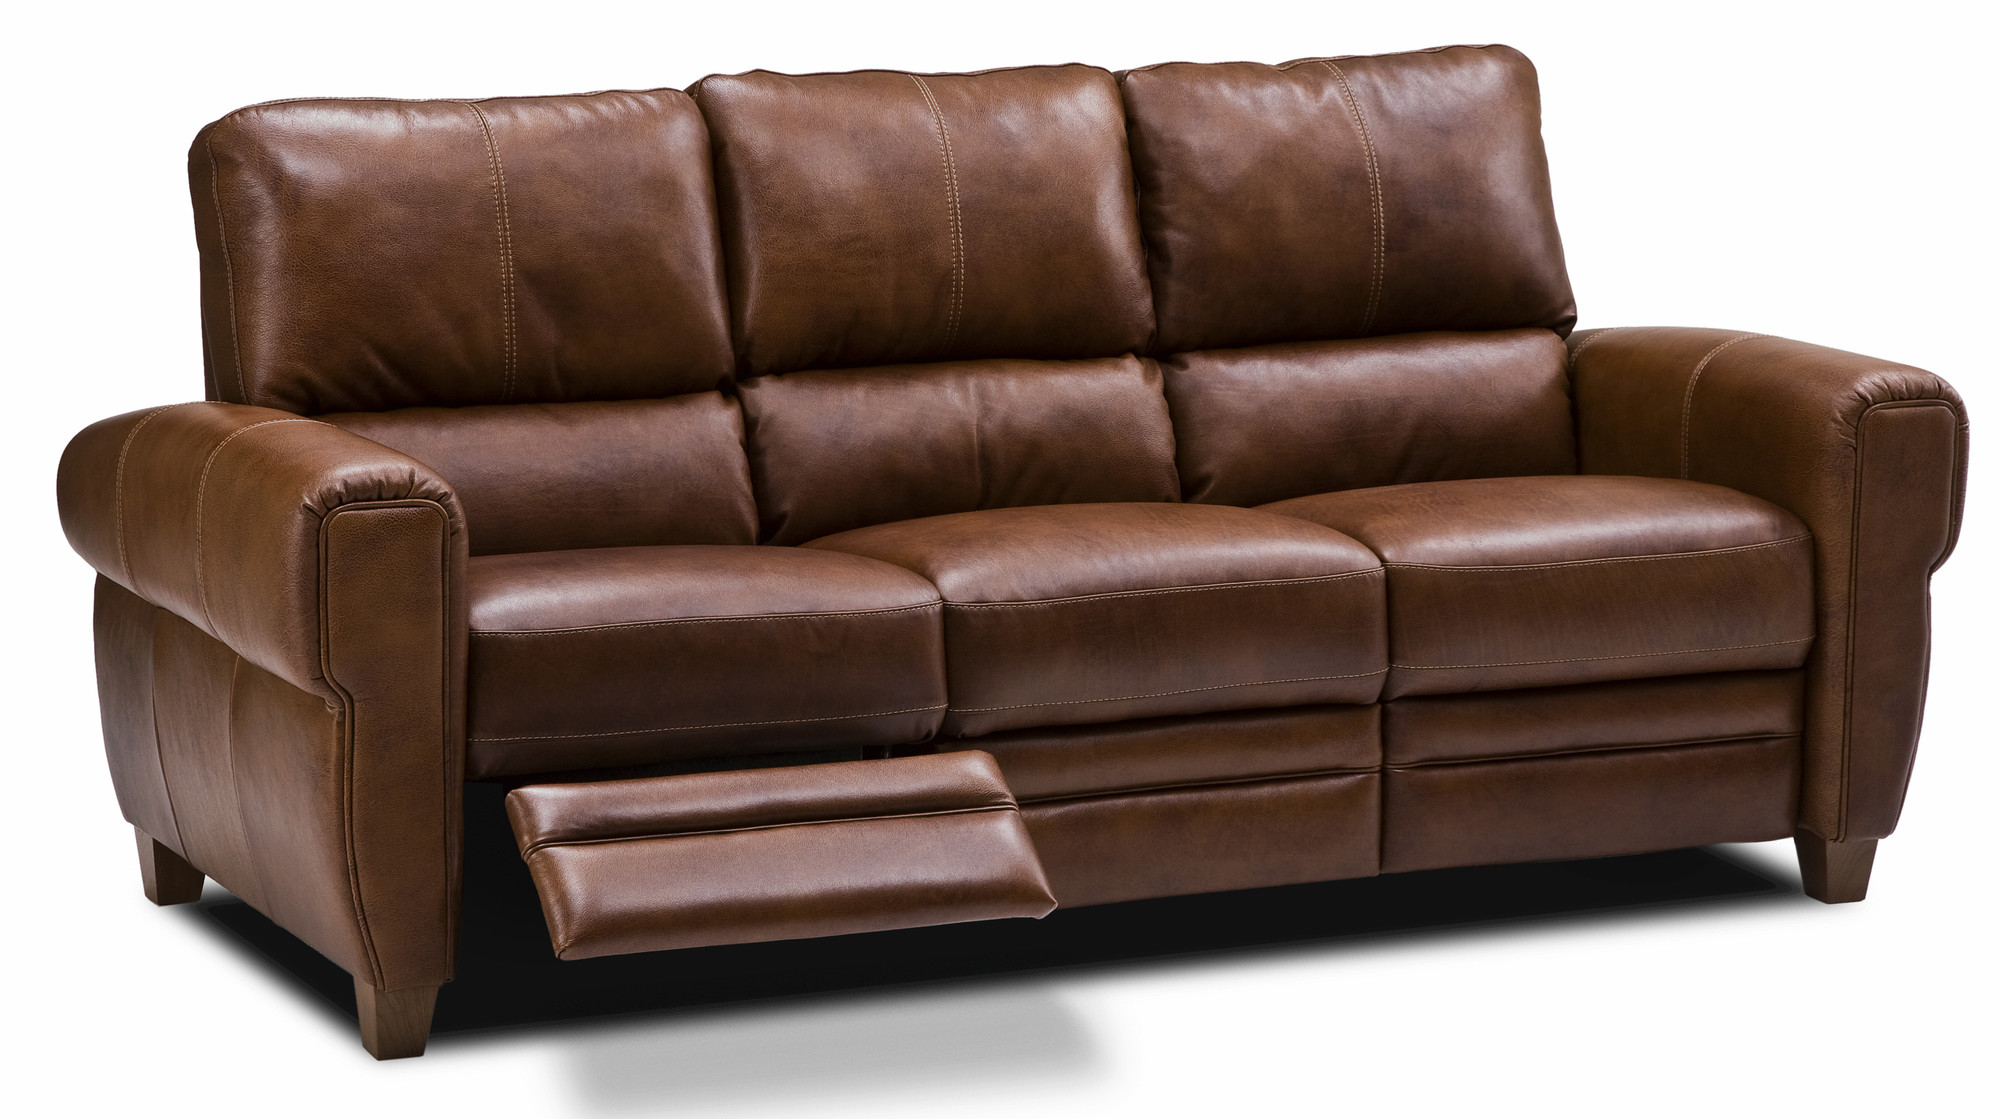 modern recliner sofa bed